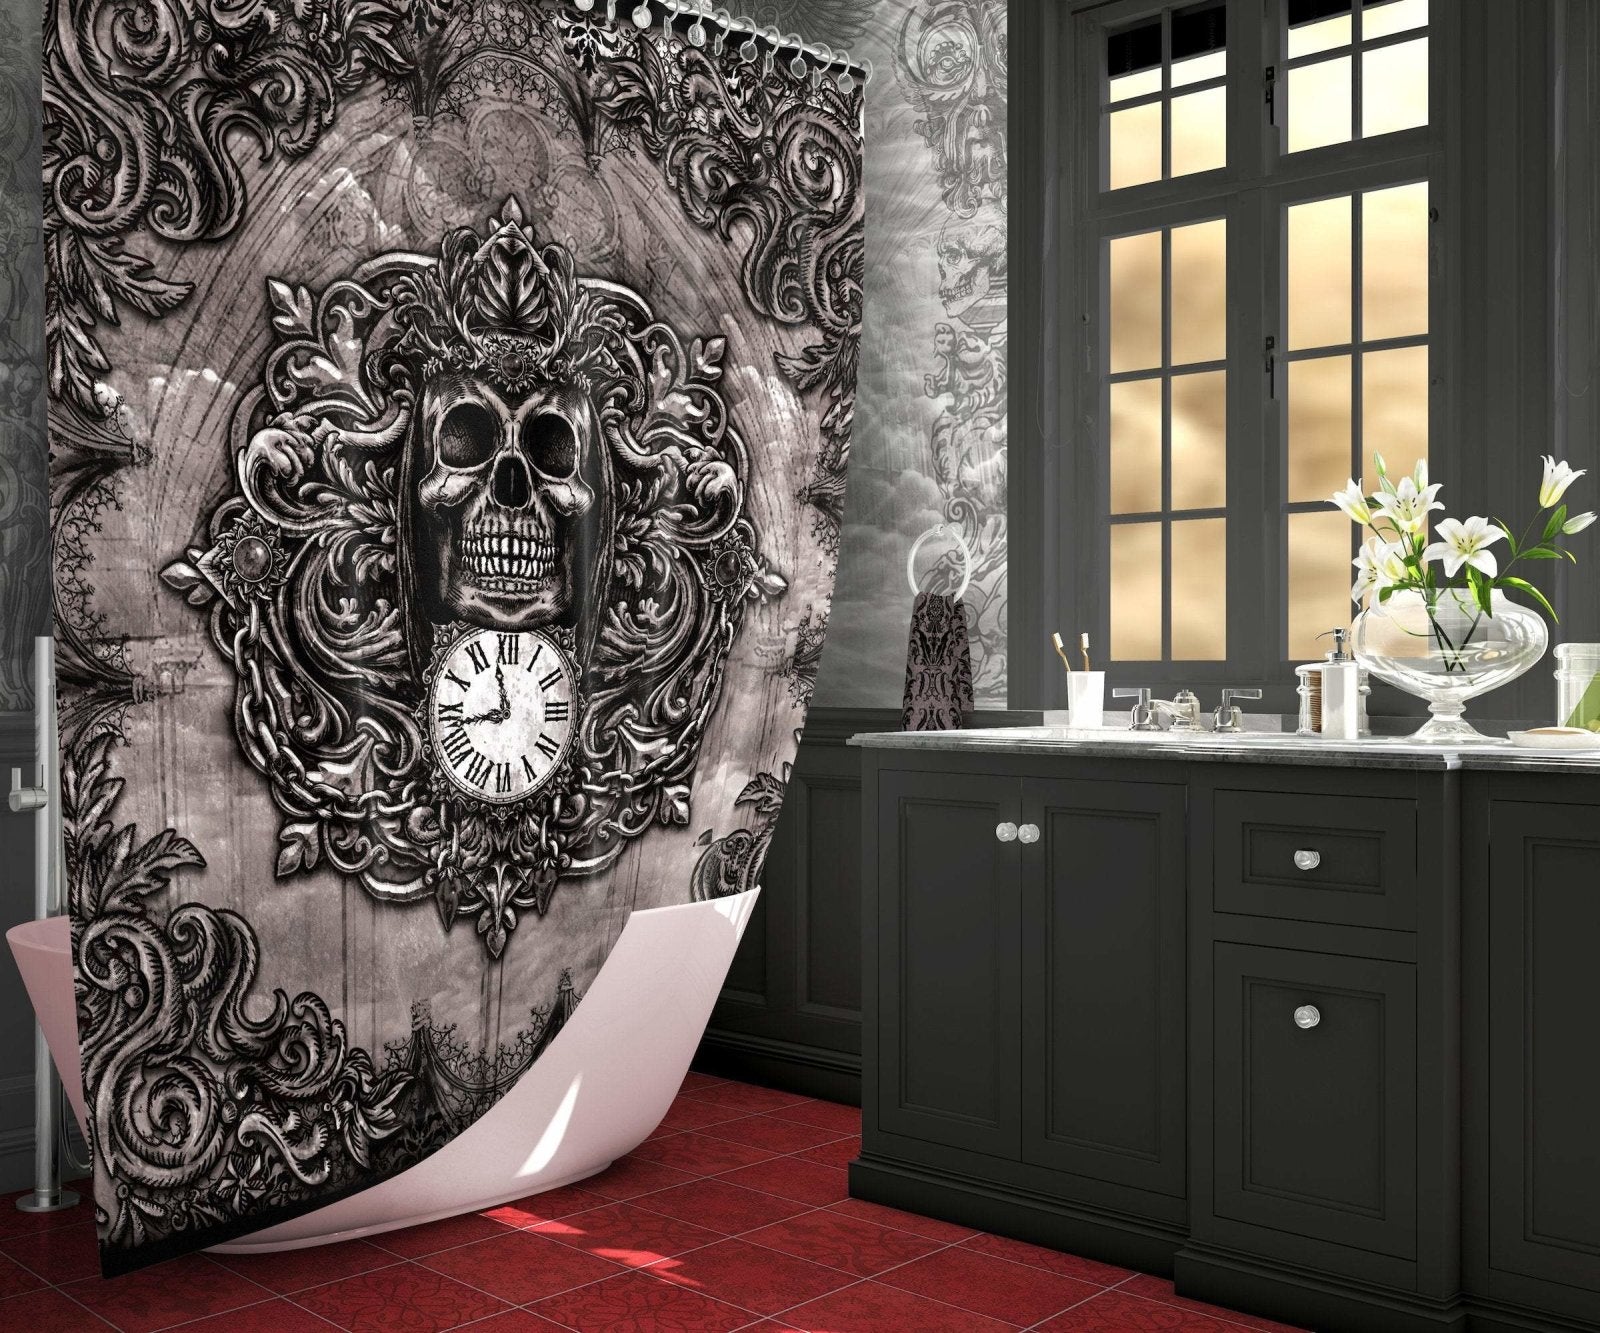 Gothic Shower Curtain, Horror Bathroom Decor, Skull, Grim Reaper, Goth Art - 3 Colors - Abysm Internal